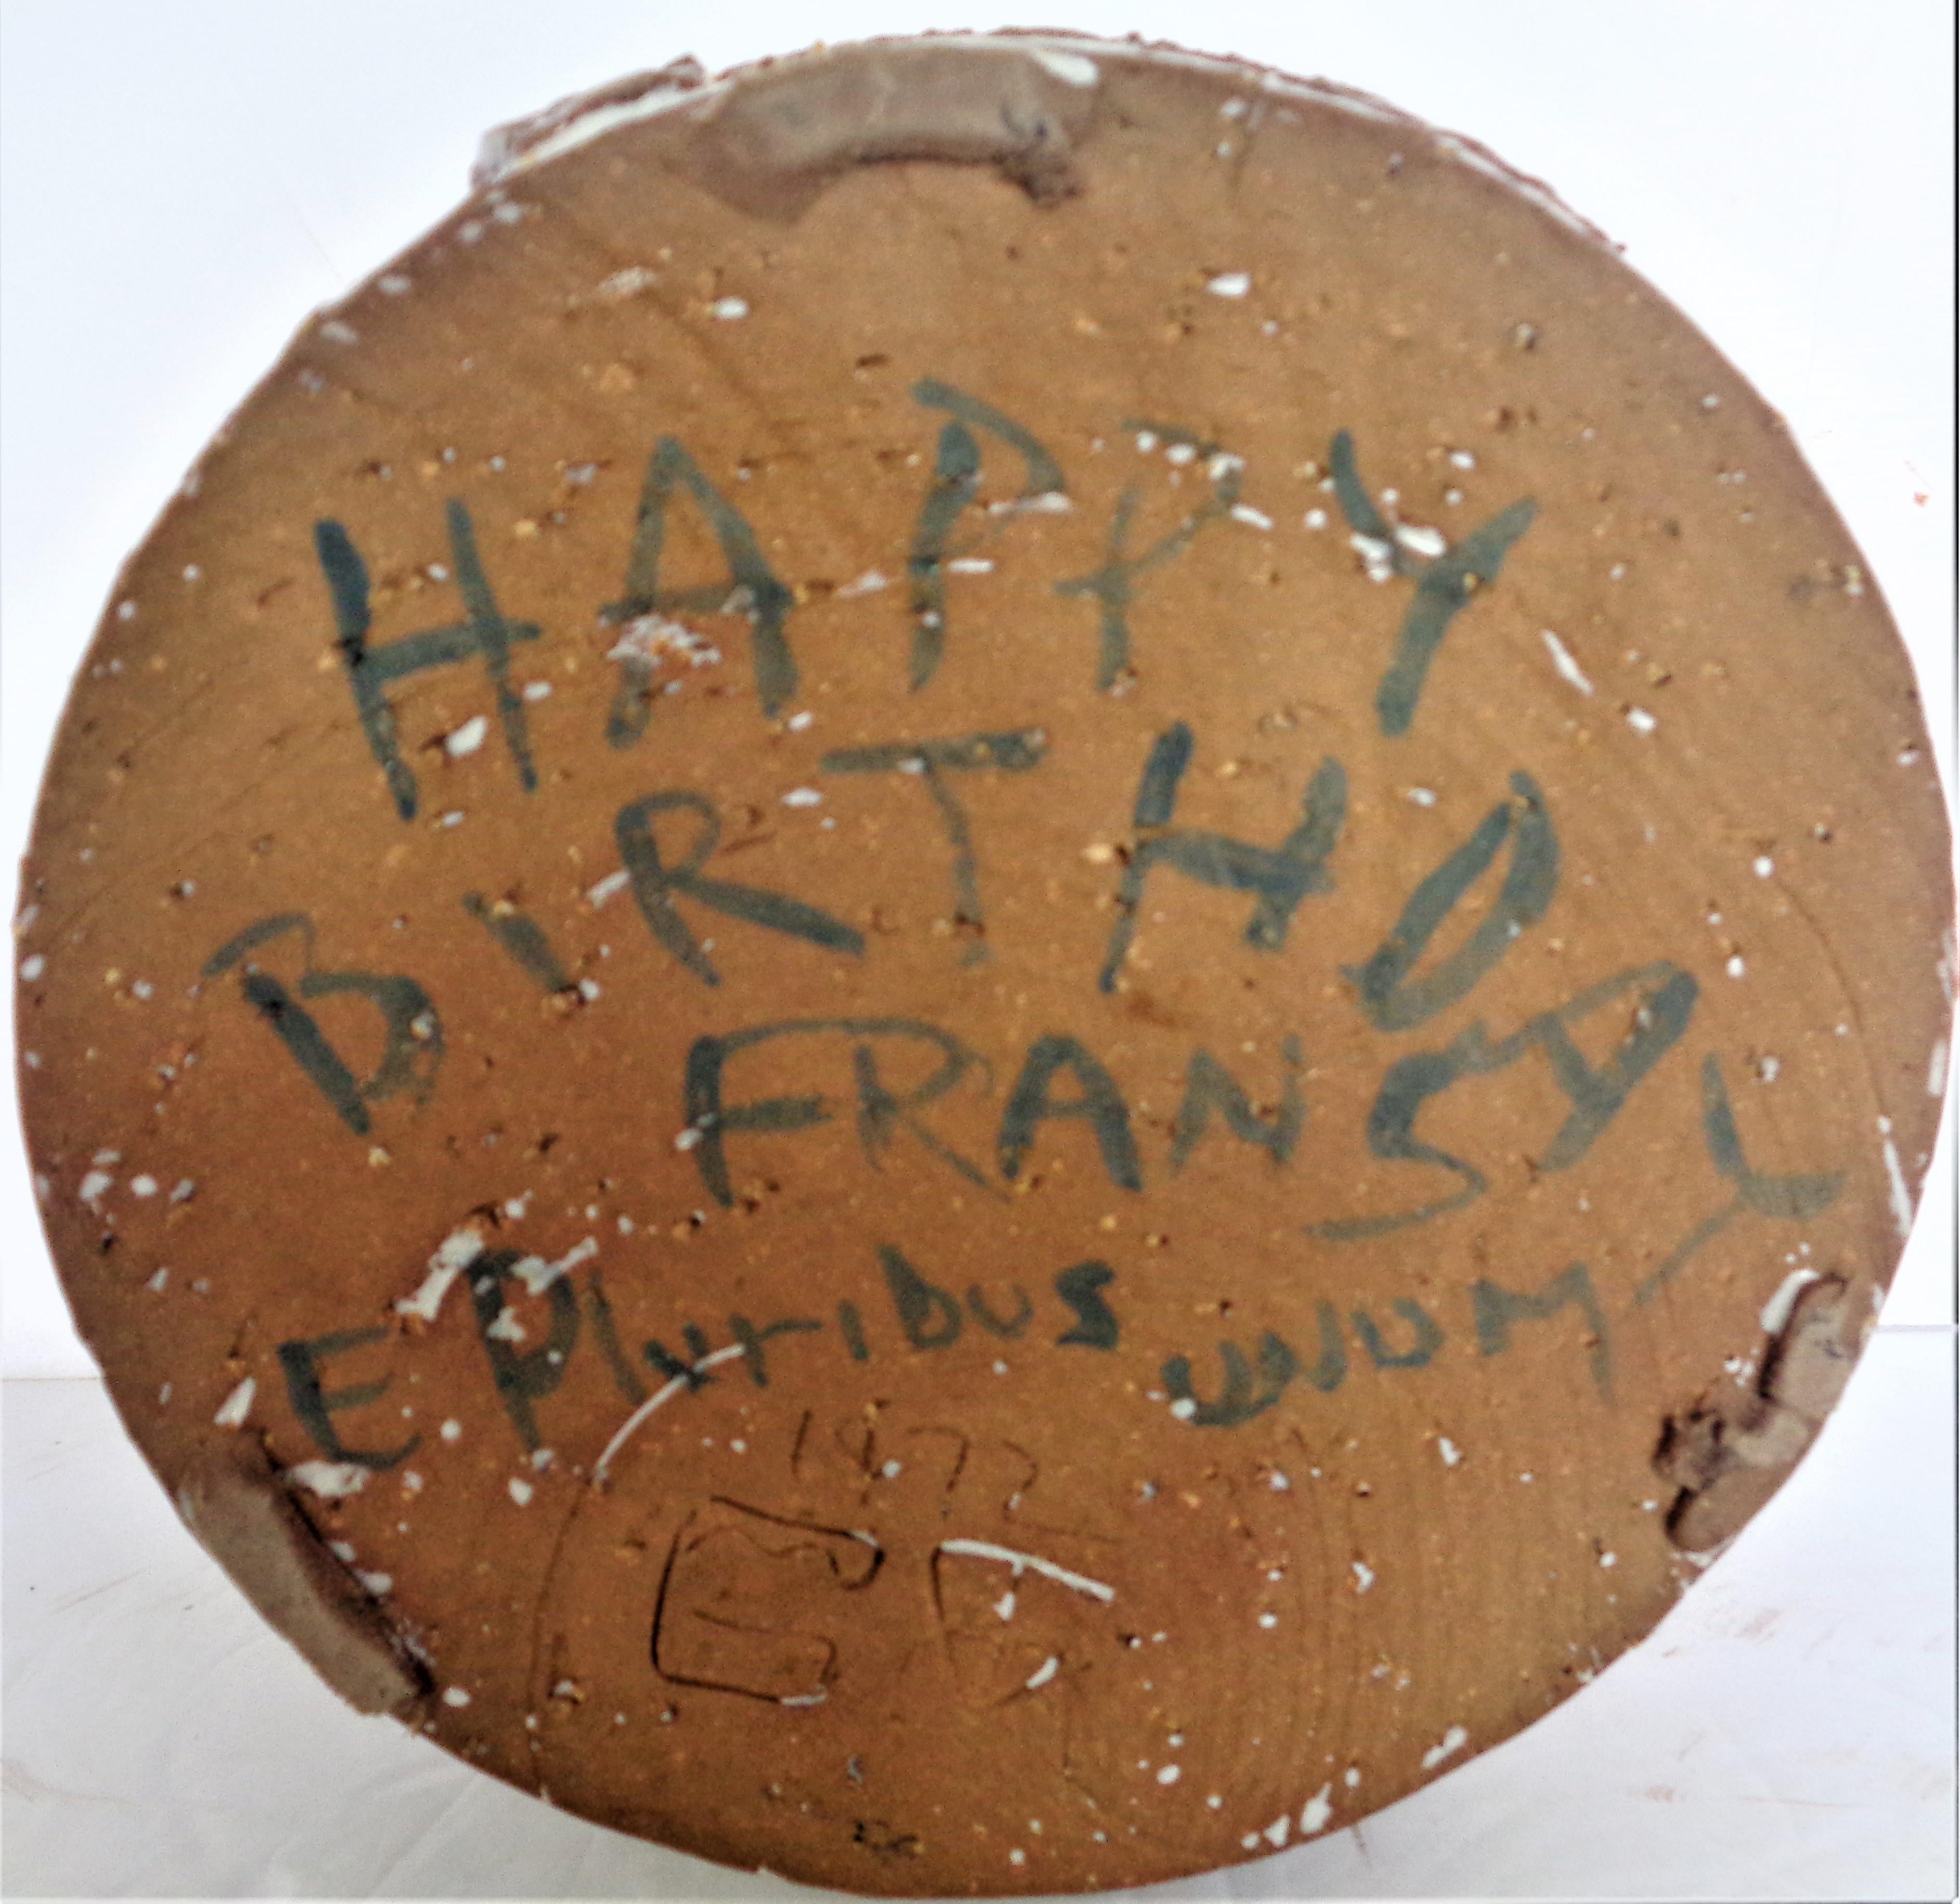 Hand Built Stoneware Birthday Cake Sculpture for Frans Wildenhain, 1972 5